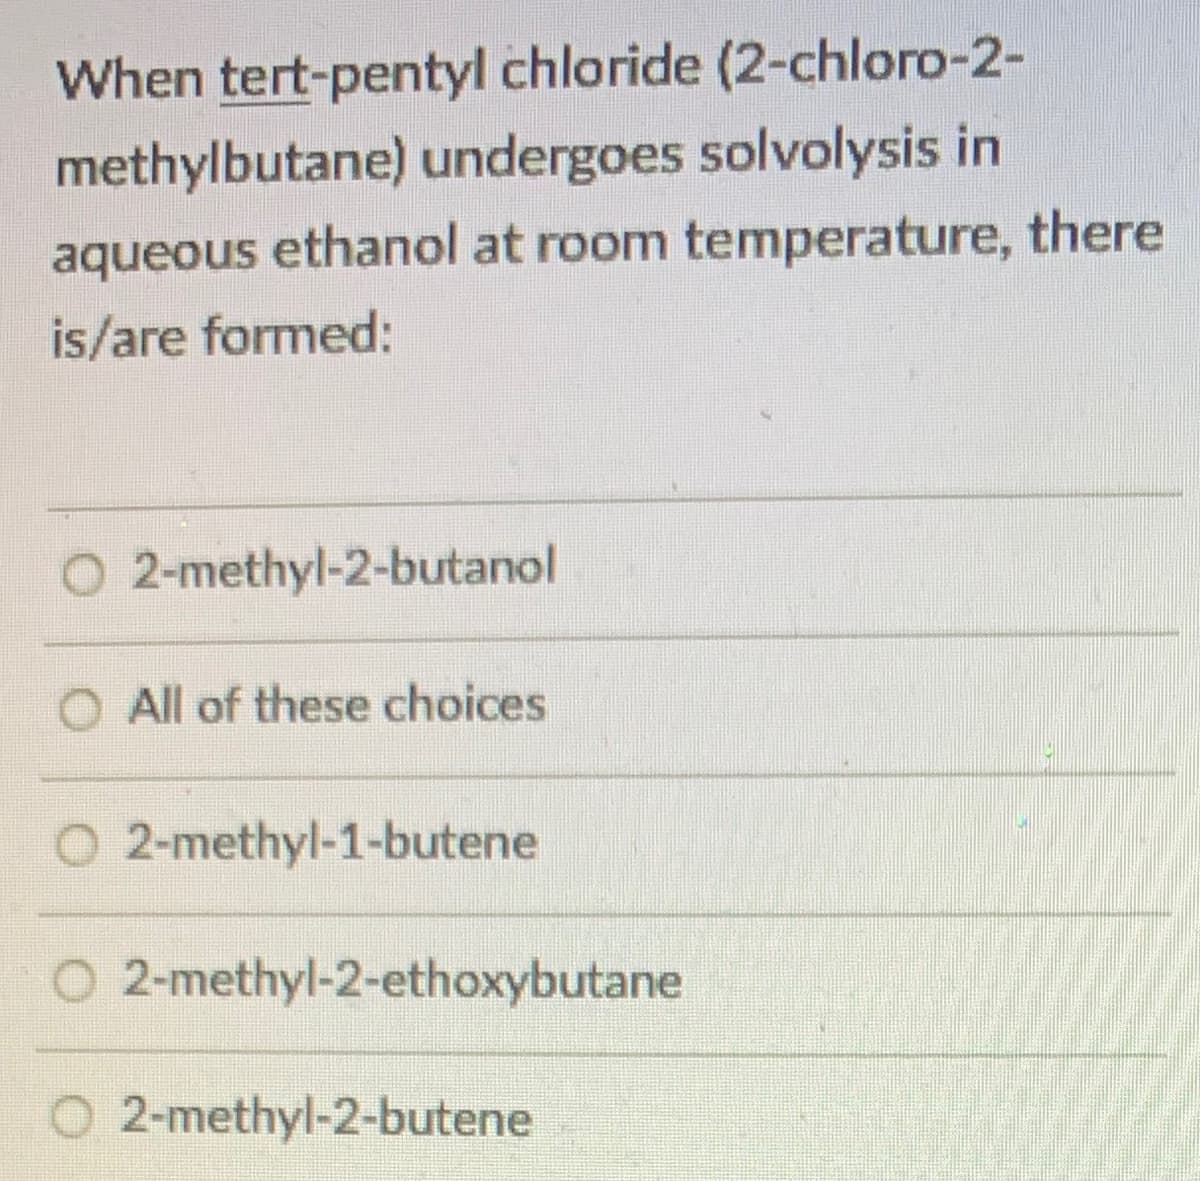 When tert-pentyl chloride (2-chloro-2-
methylbutane) undergoes solvolysis in
aqueous ethanol at room temperature, there
is/are formed:
O 2-methyl-2-butanol
All of these choices
2-methyl-1-butene
2-methyl-2-ethoxybutane
O 2-methyl-2-butene
